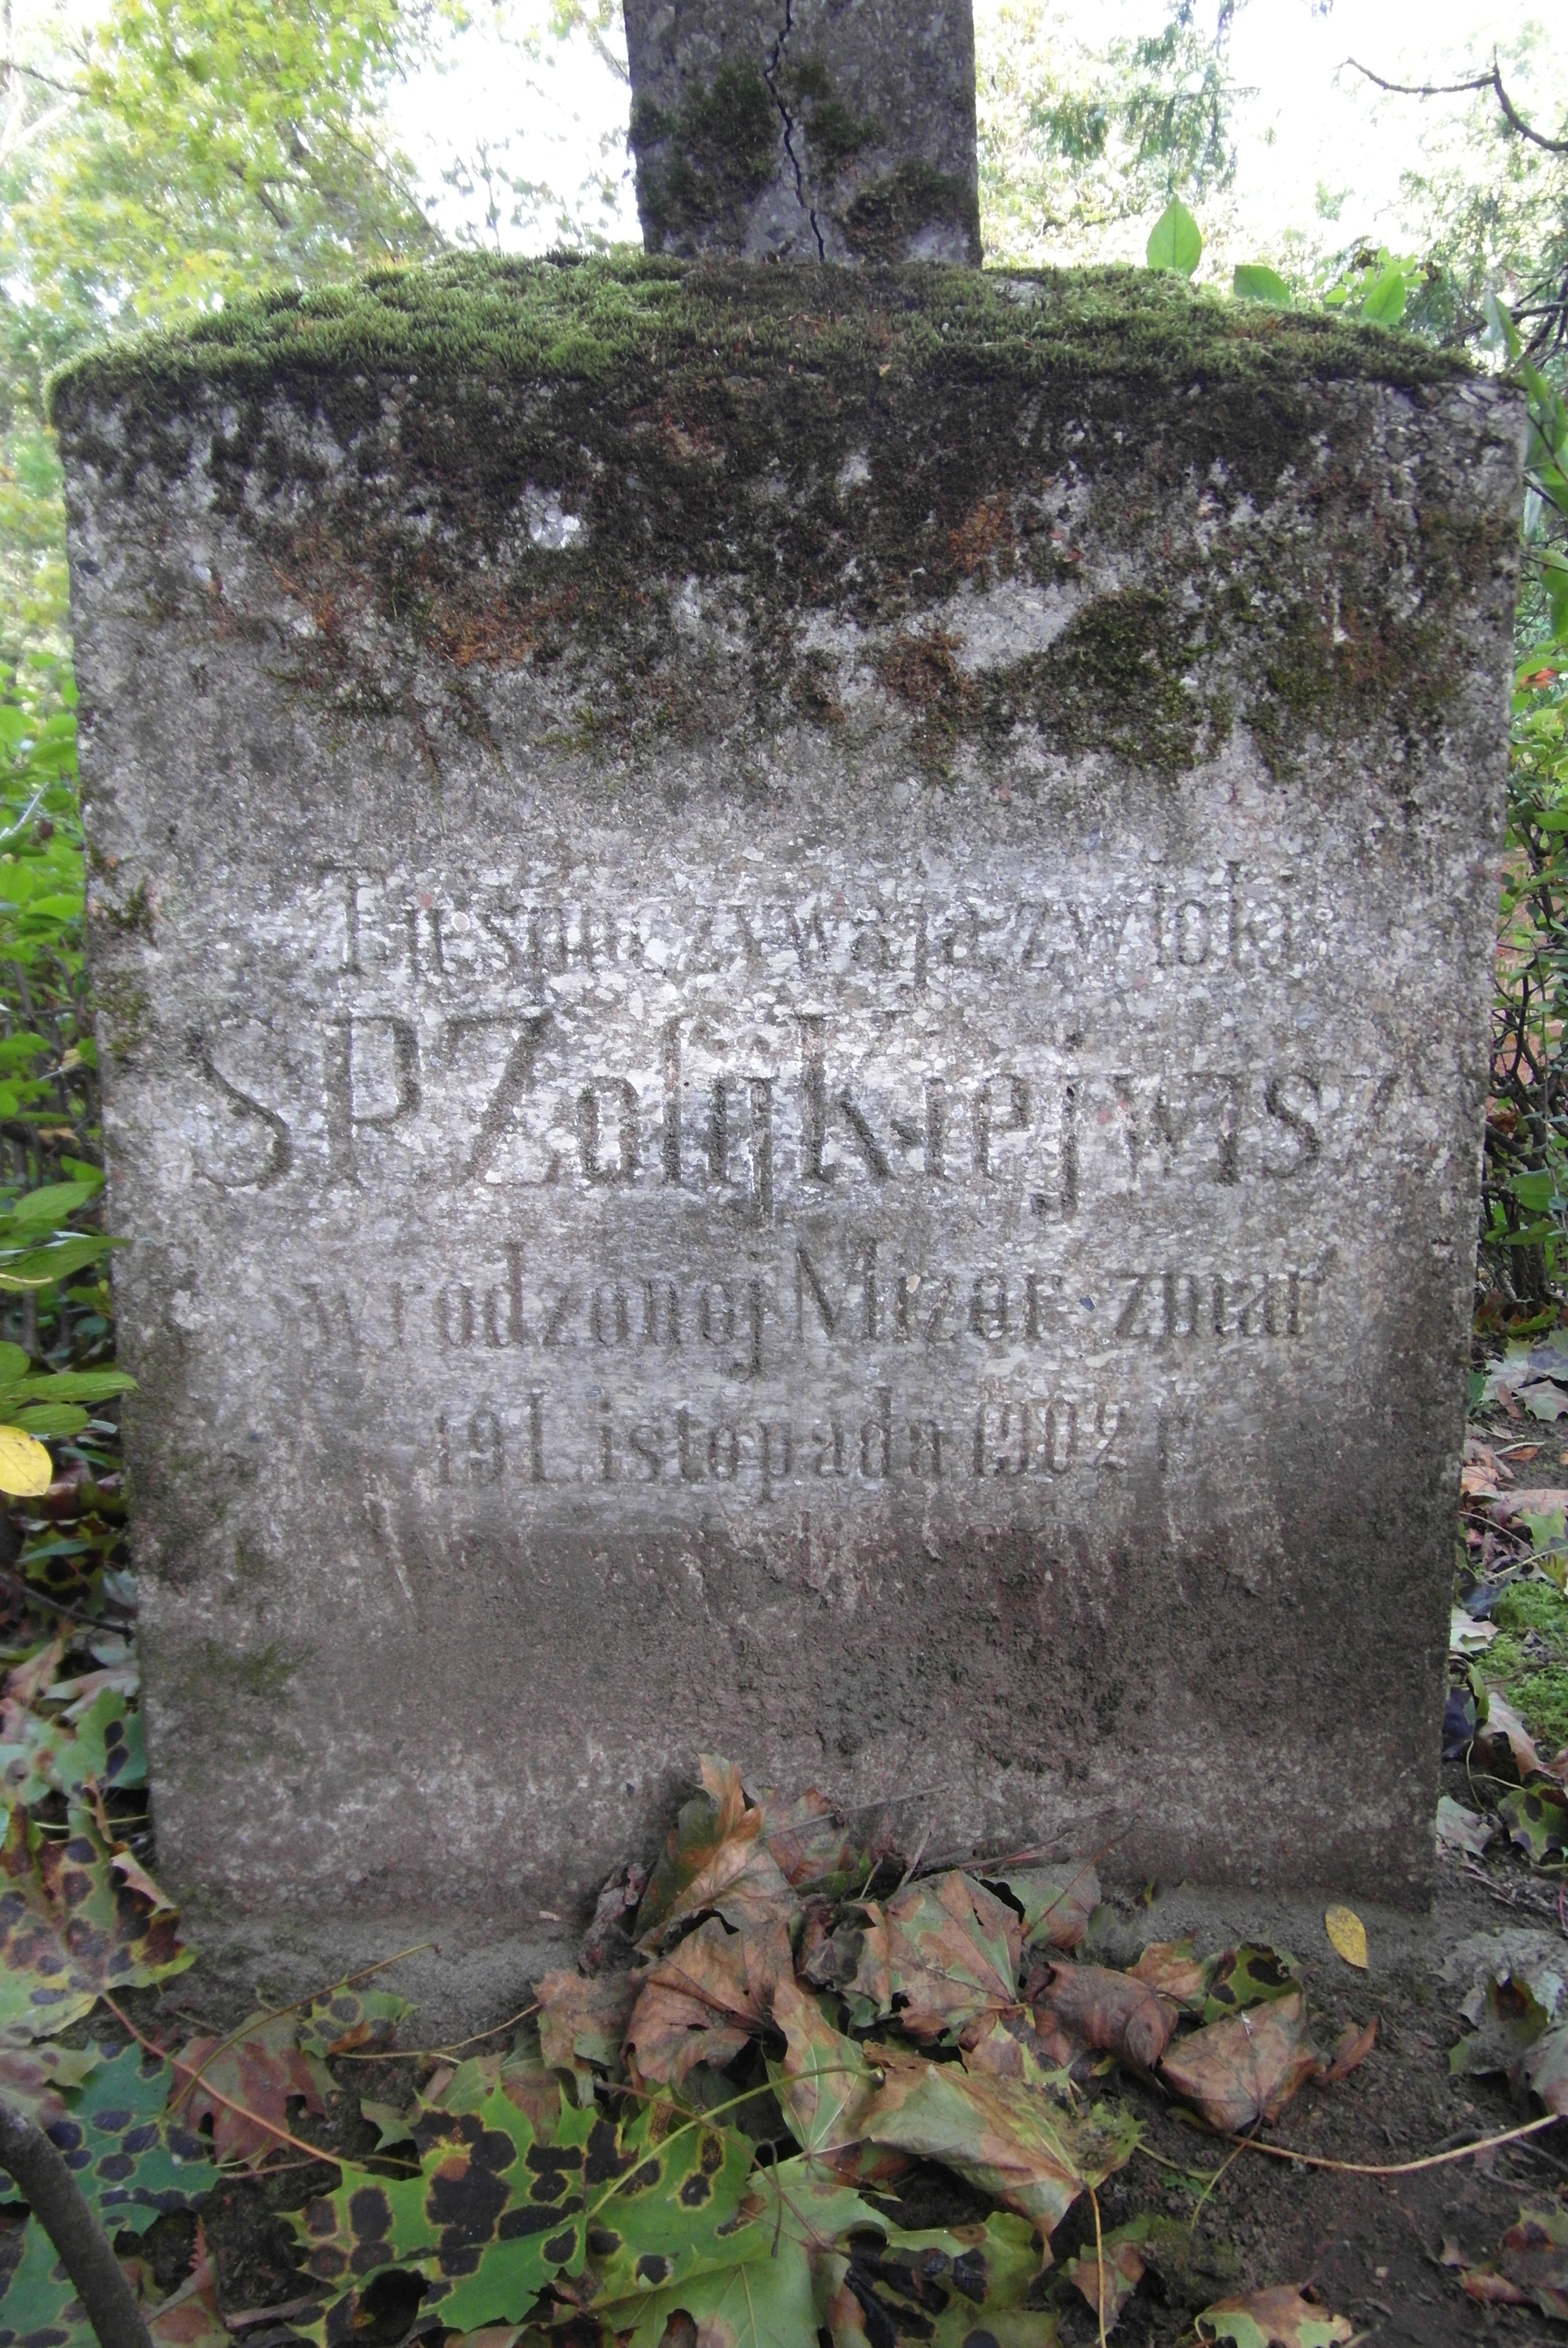 Inscription from the gravestone of Zofia Kiejwisz, St Michael's Cemetery in Riga, as of 2021.